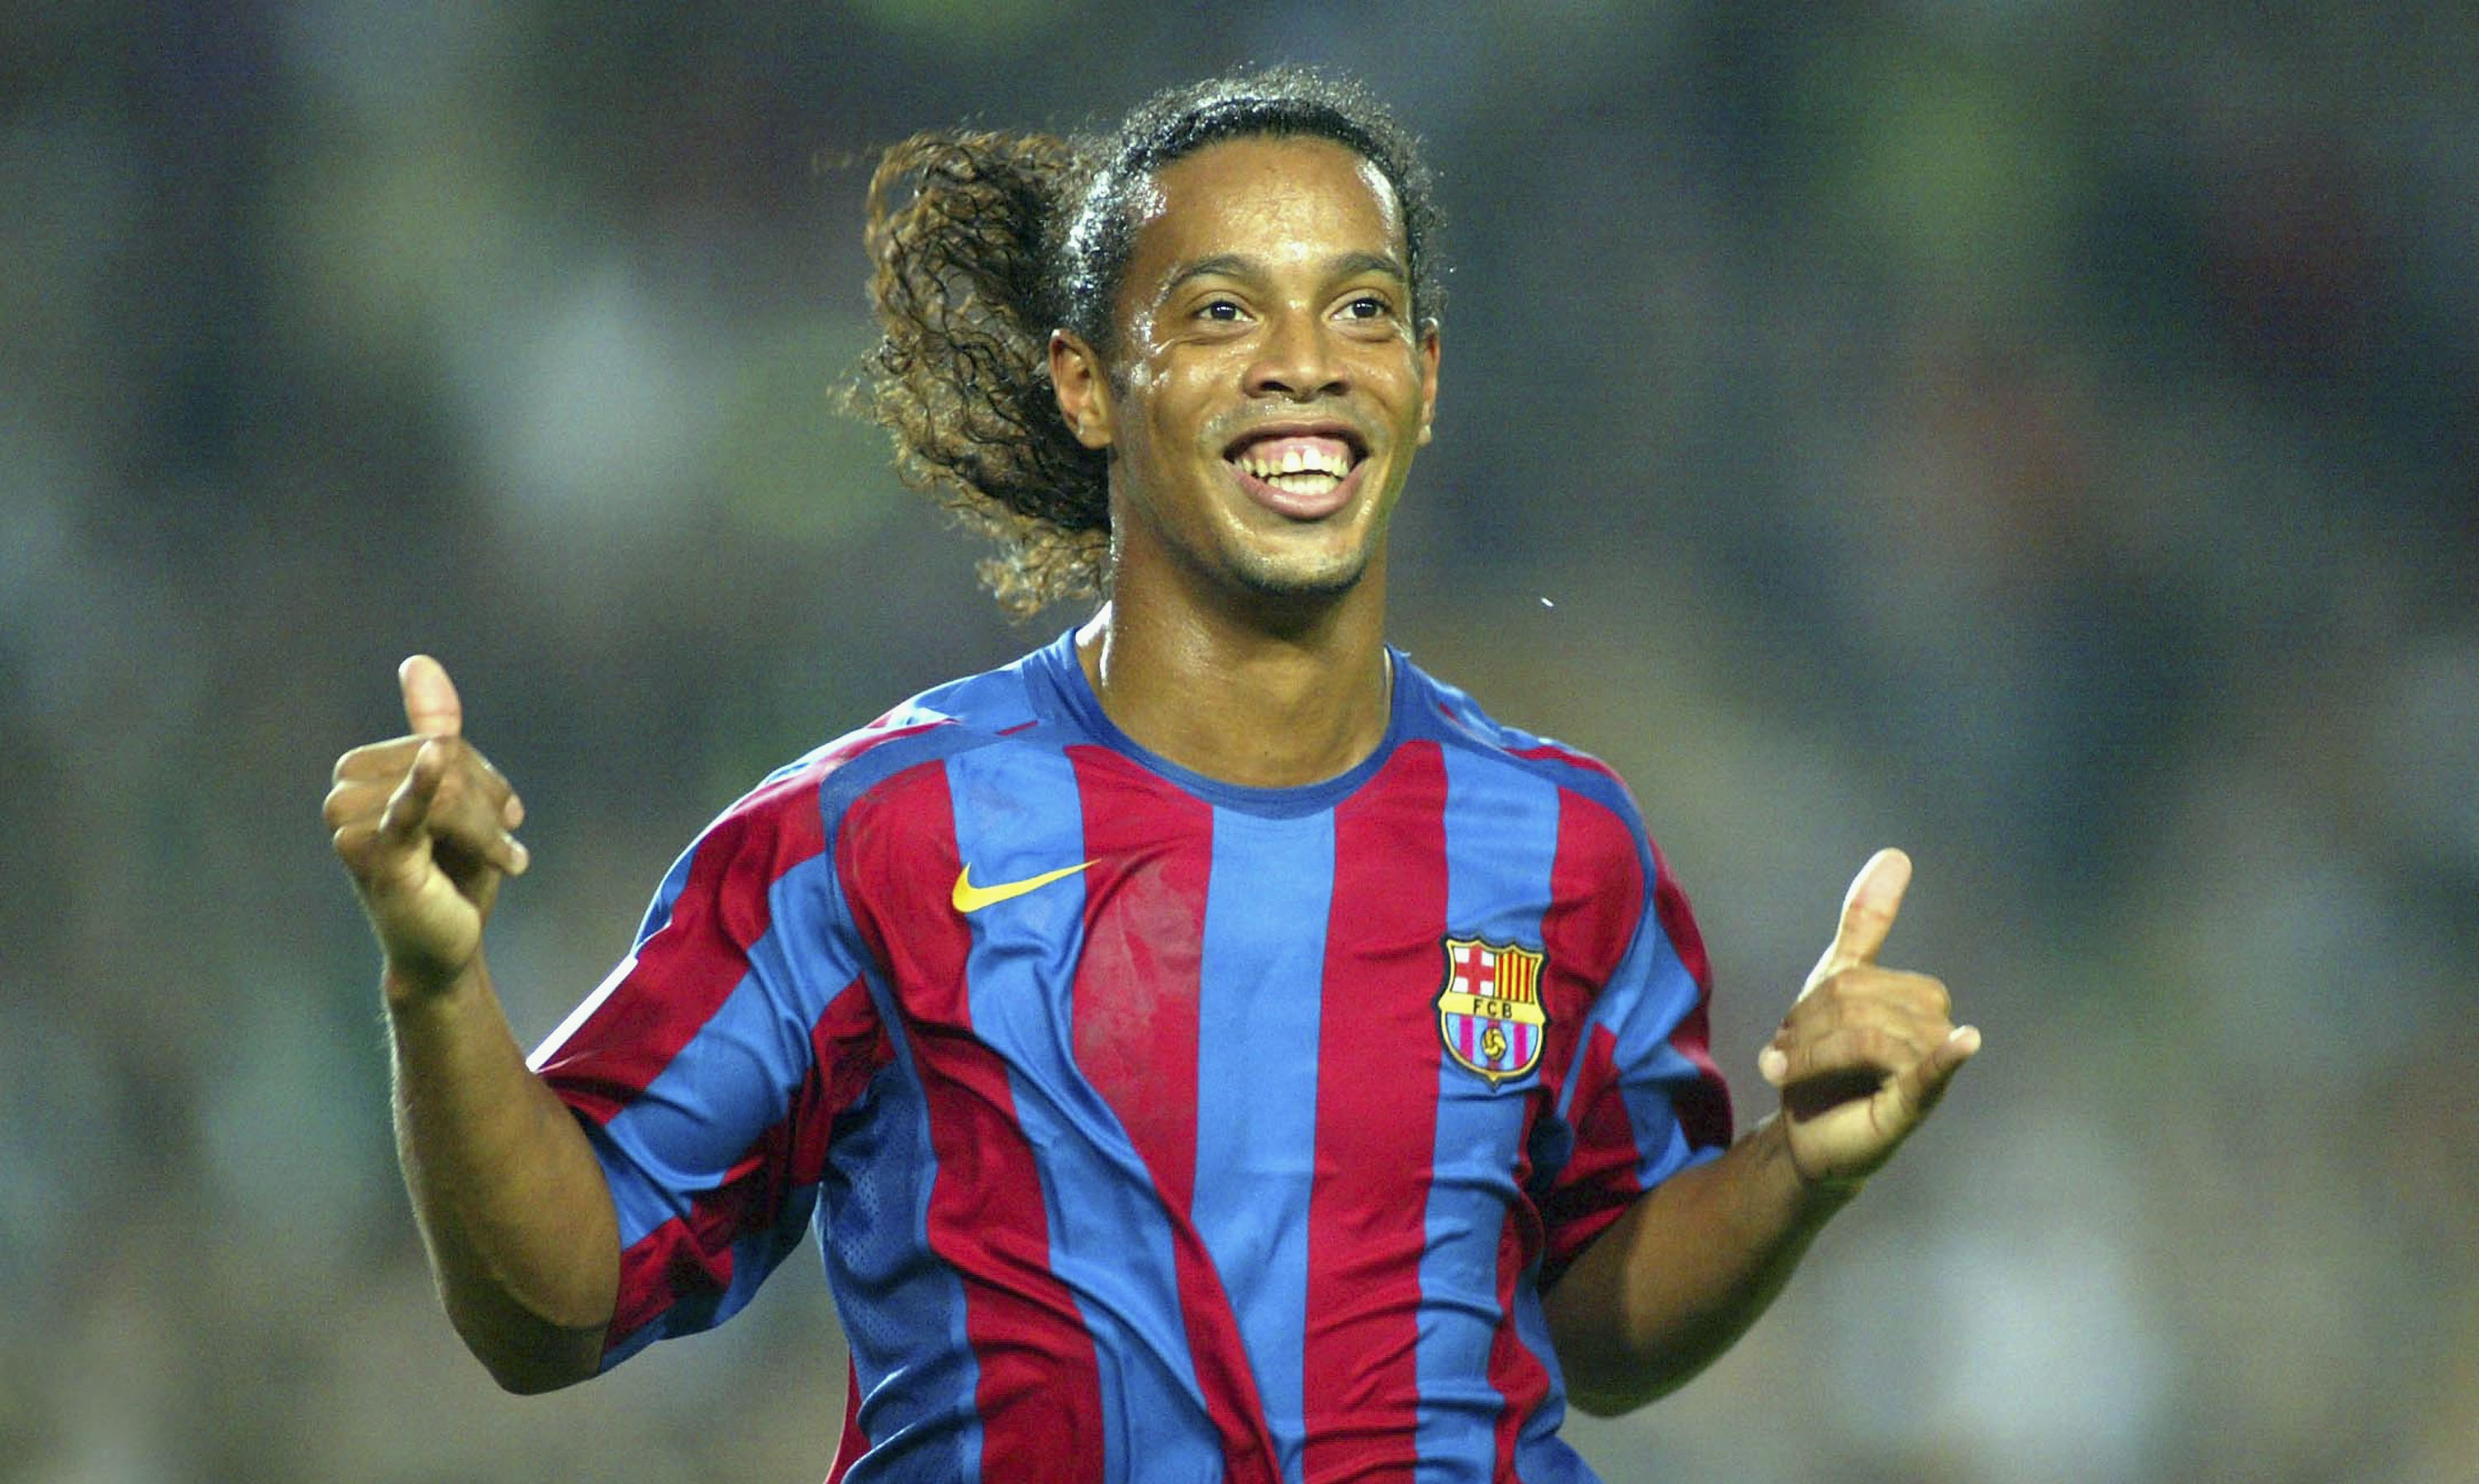 Tiểu sử về Ronaldinho